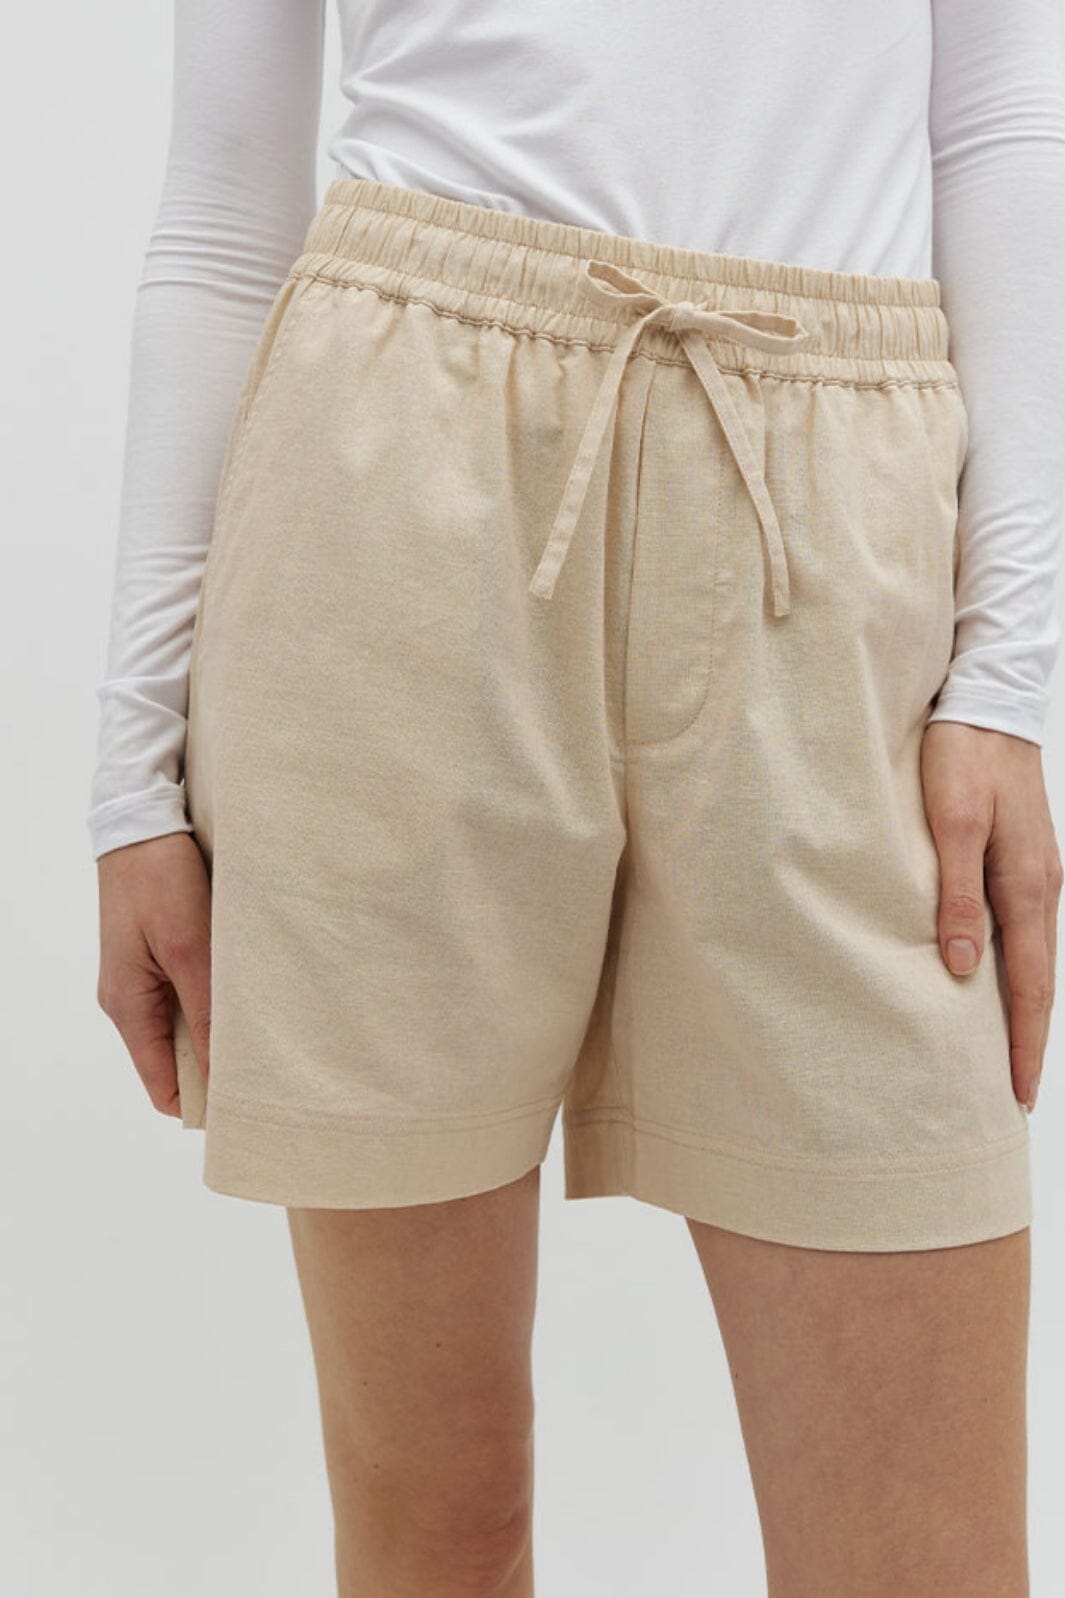 MbyM - Fidelina-M - Oyster Shorts 